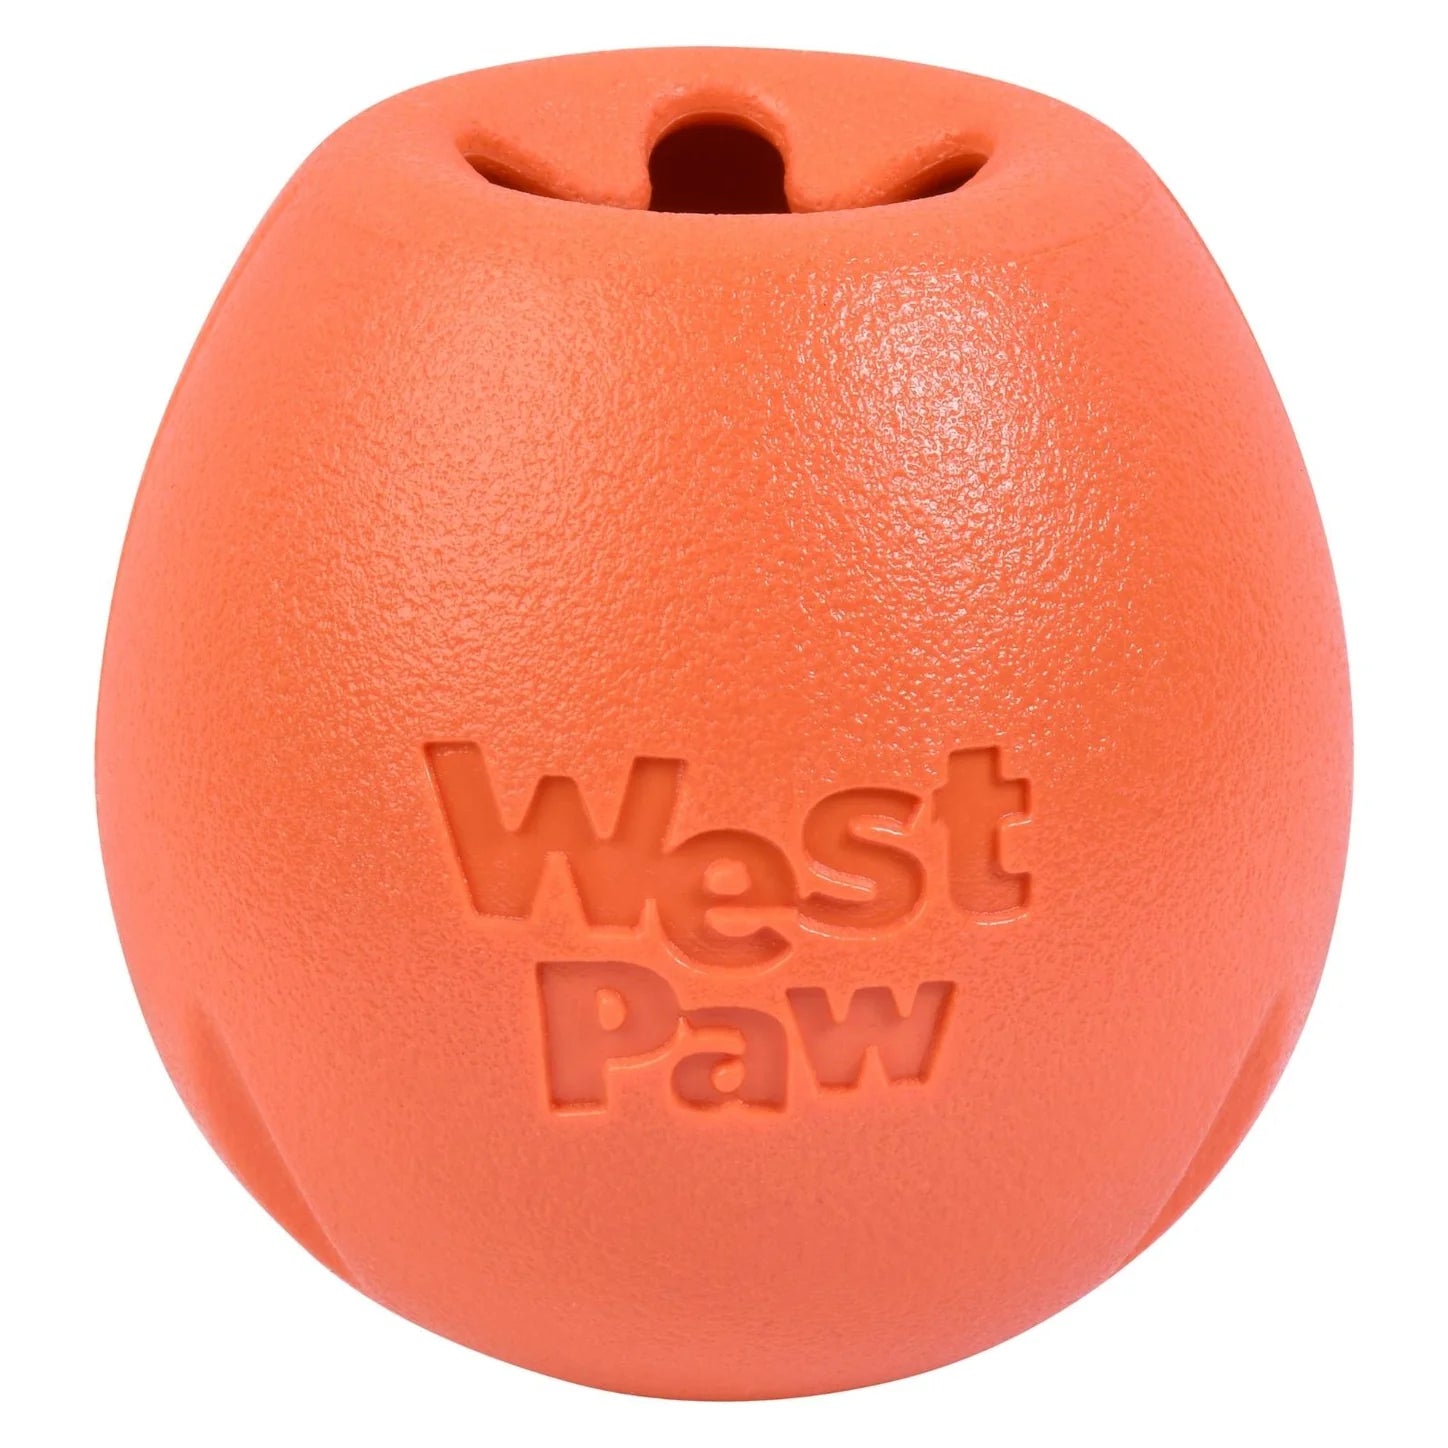 Kit de Diversión de West Paw: Zwig Verde + Skamp Morado + Rumbl Naranja